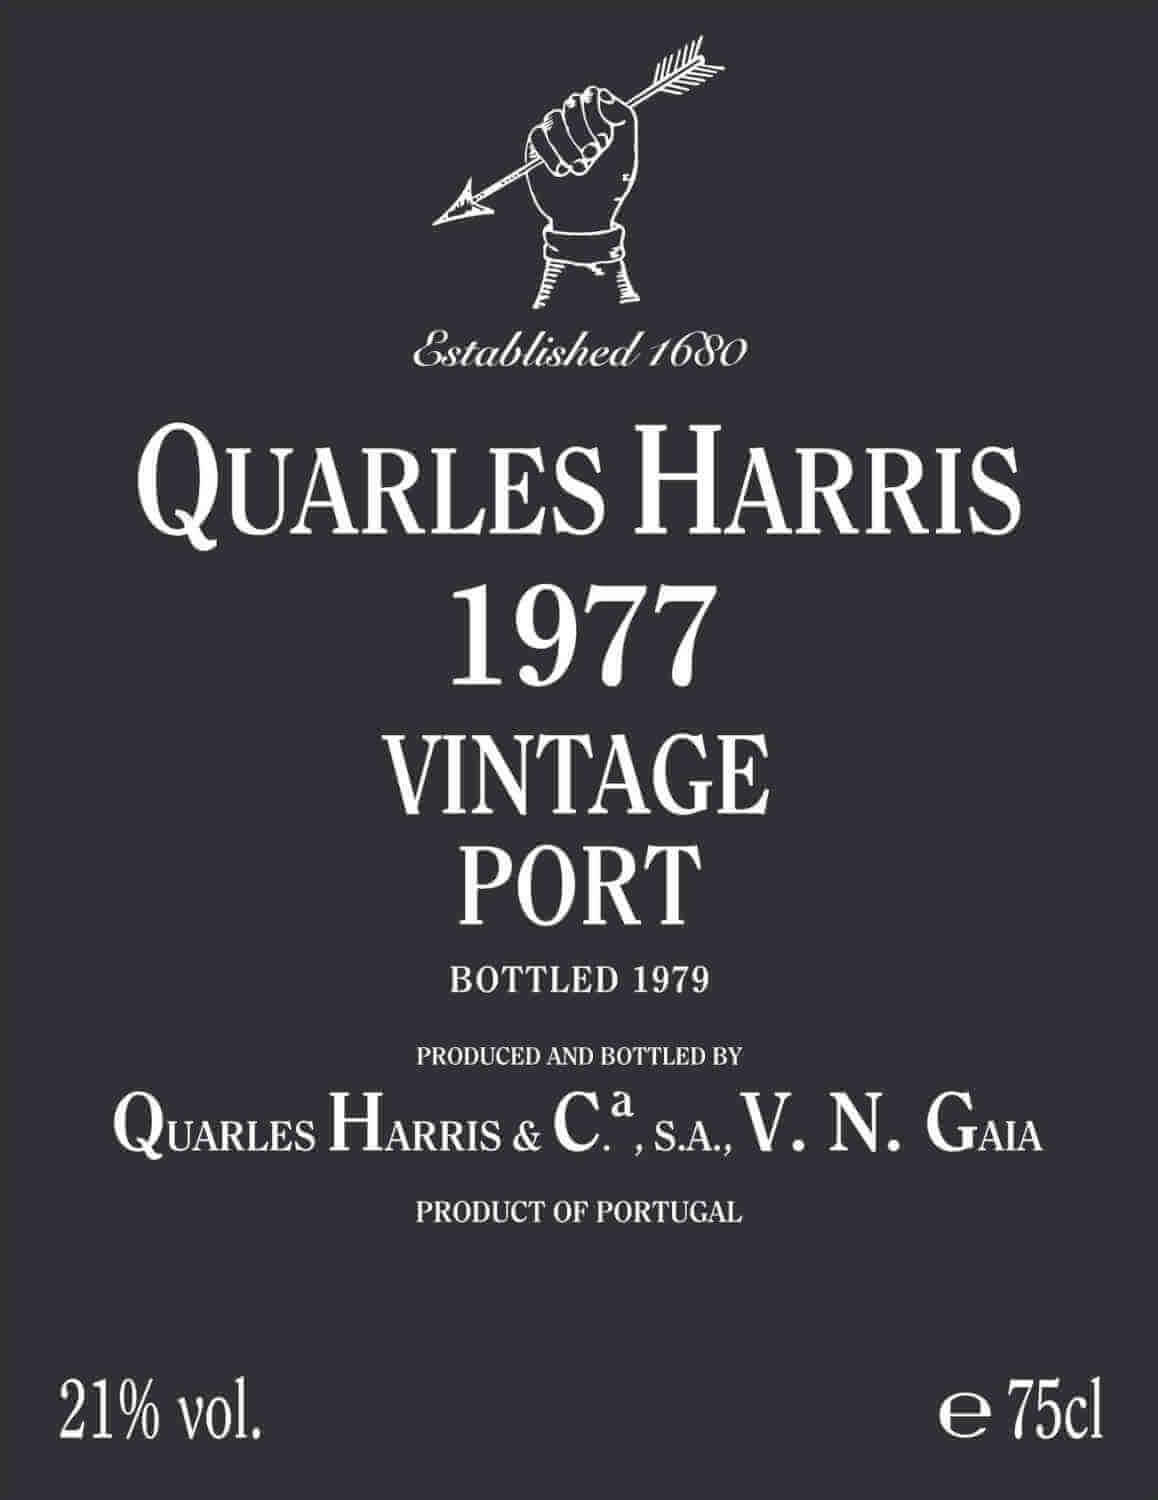 Quarles-Harris-Vintage-Port-1977-label